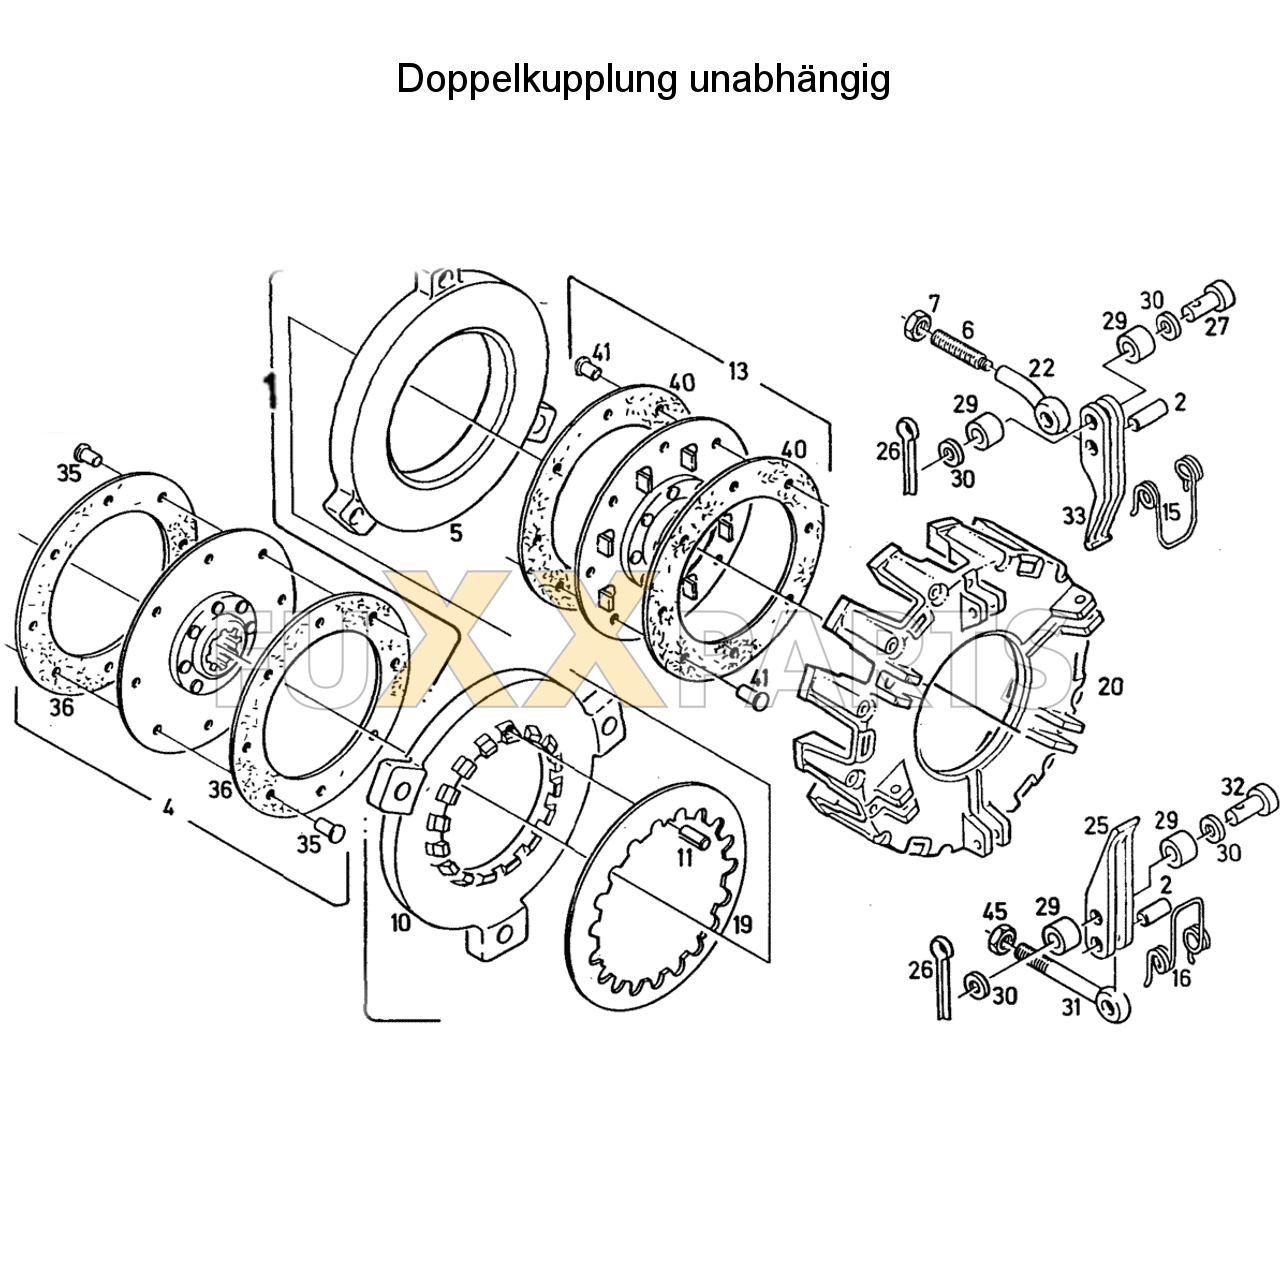 D 5207 C Doppelkupplung unabhängig